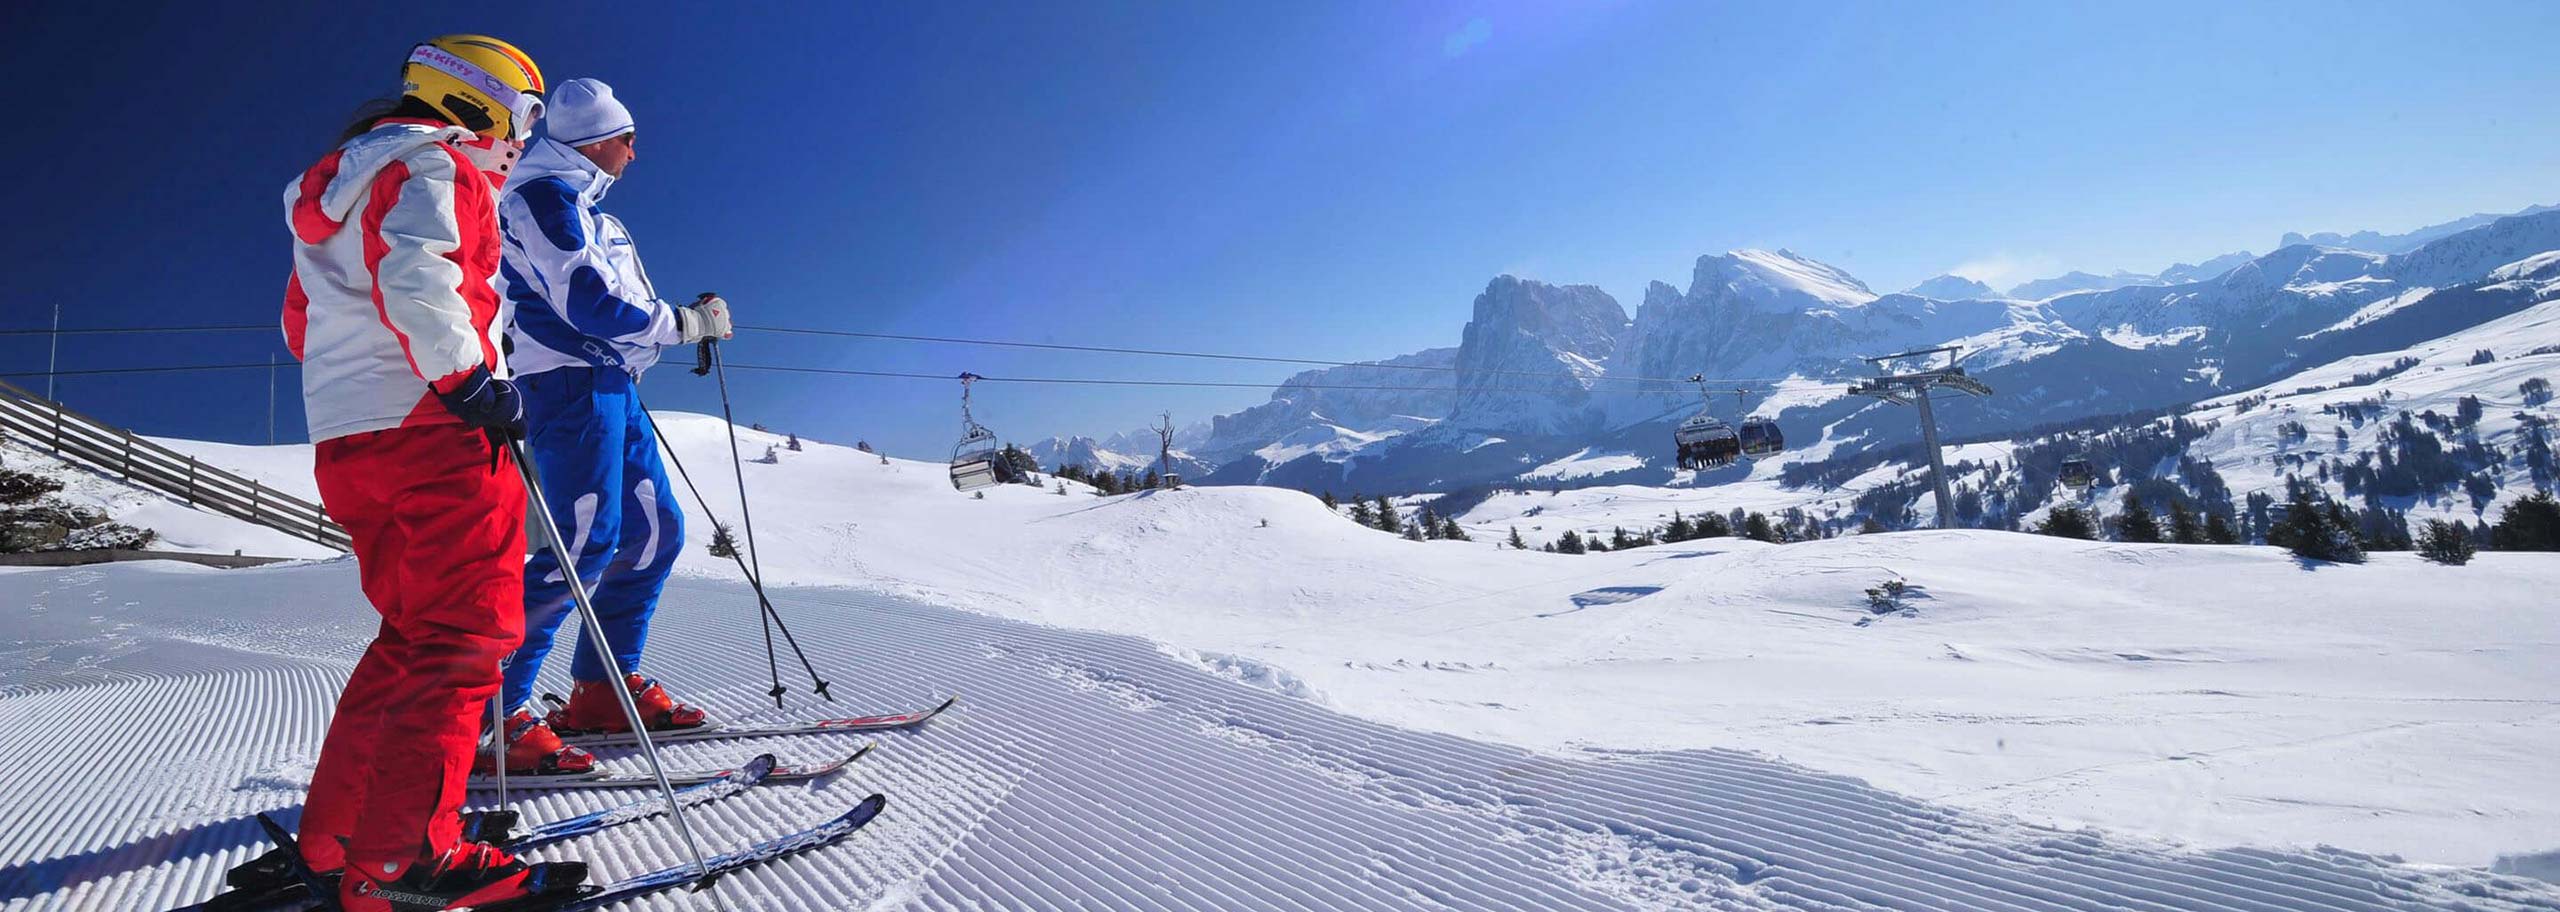 Ski Tour with a Mountain Guide in the Alpe di Siusi